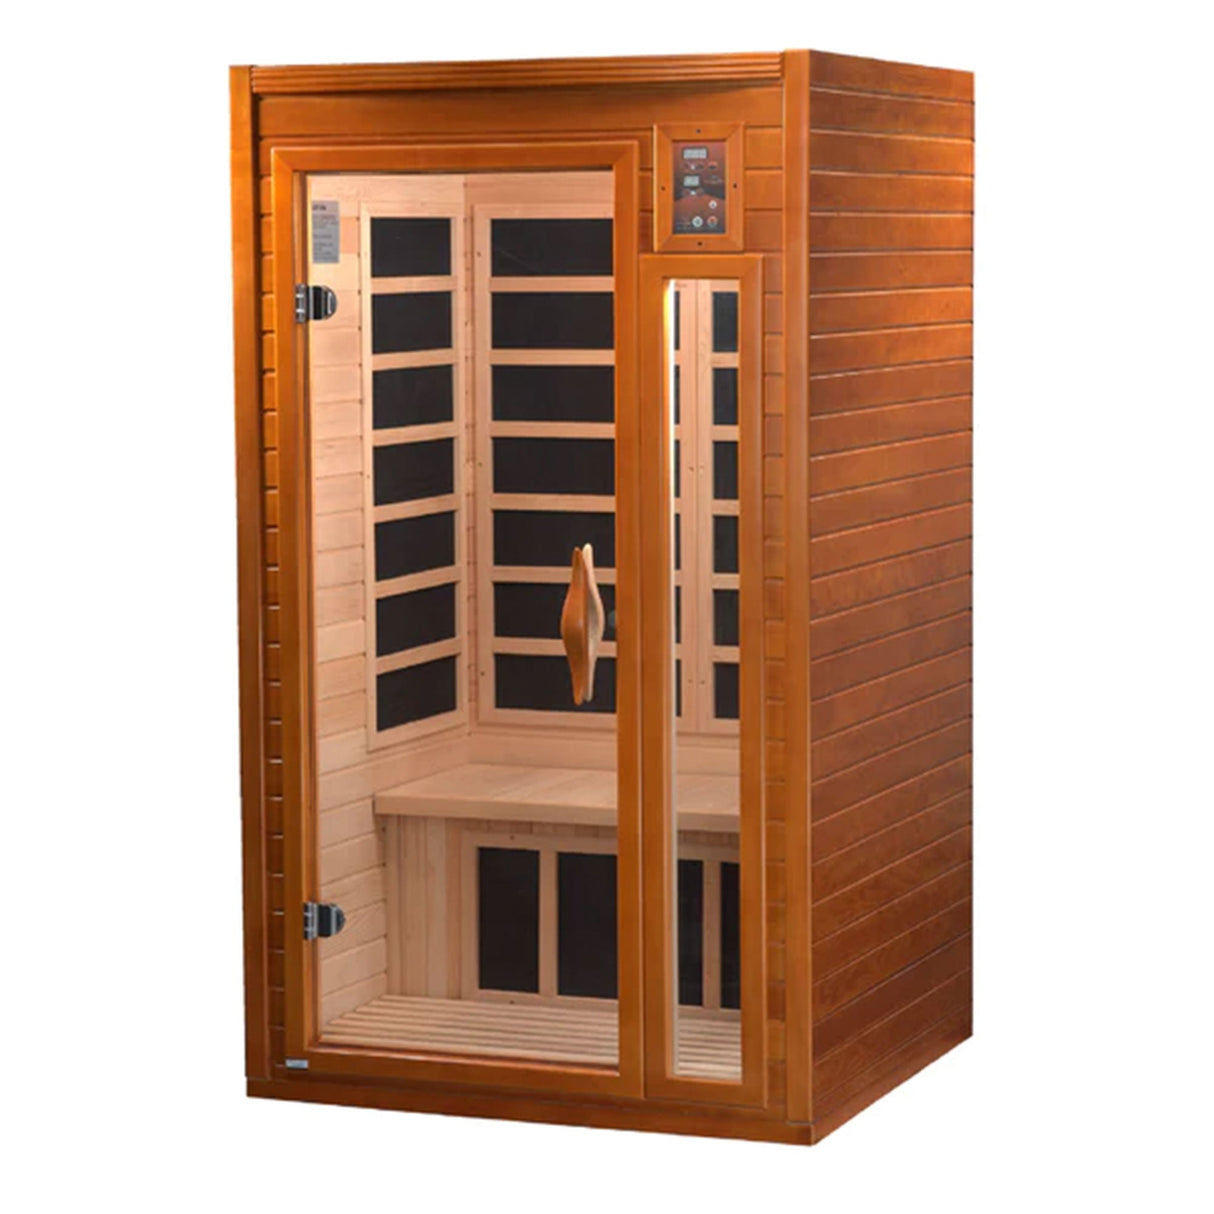 Dynamic Saunas Barcelona 1 to 2 Person Hemlock Wood Infrared Sauna for Home